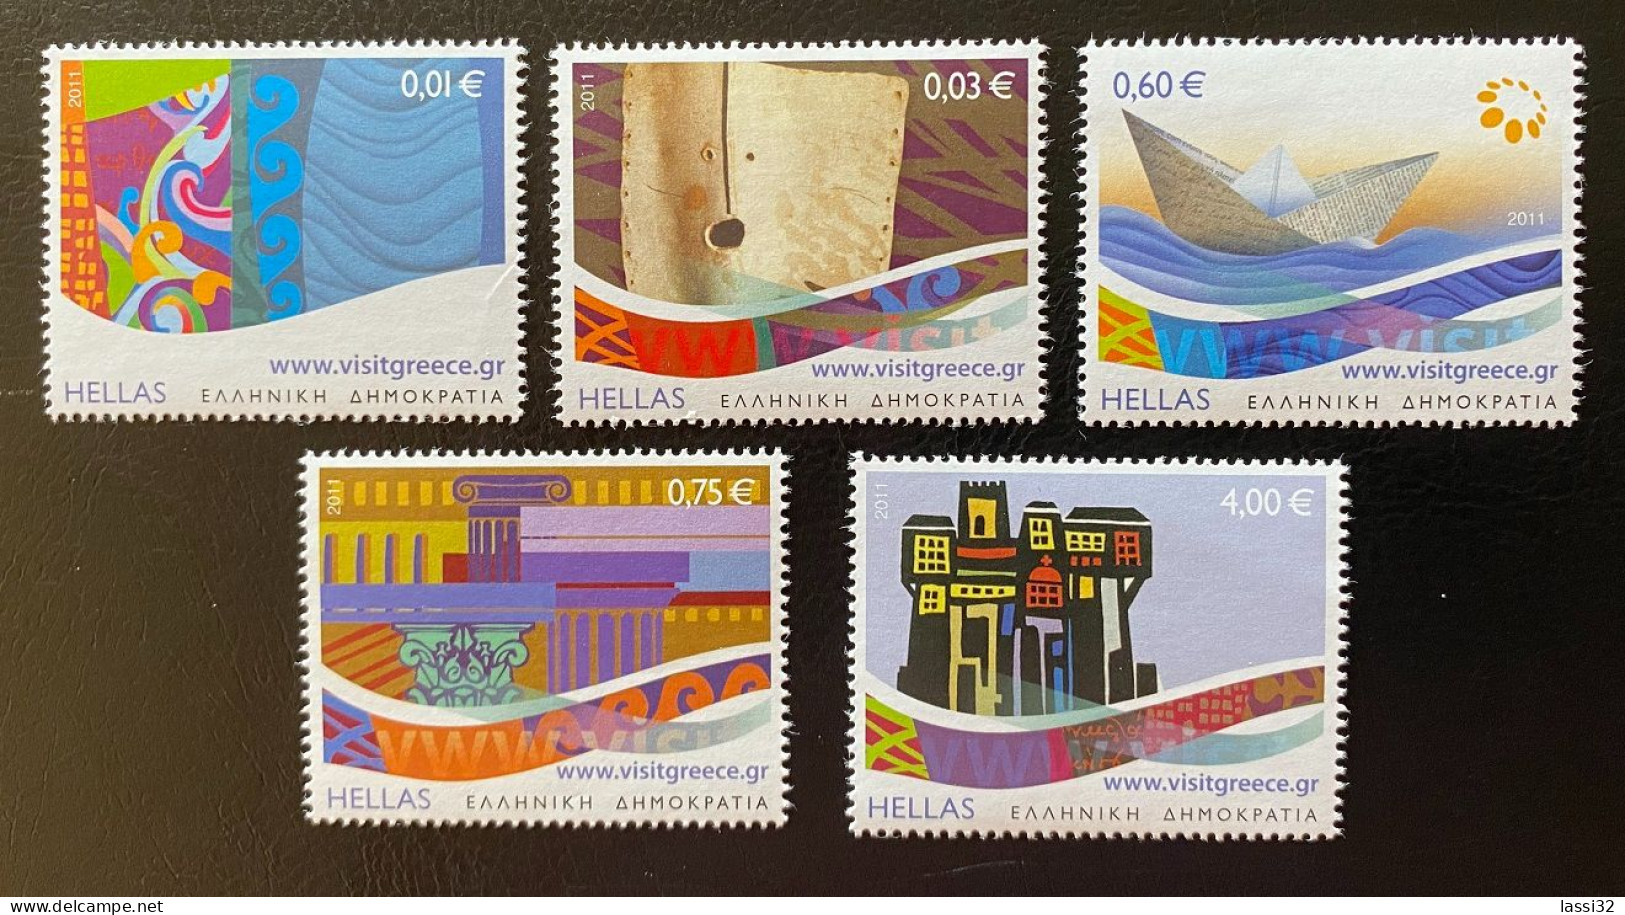 Greece 2011 Destination Greece Set MNH - Unused Stamps